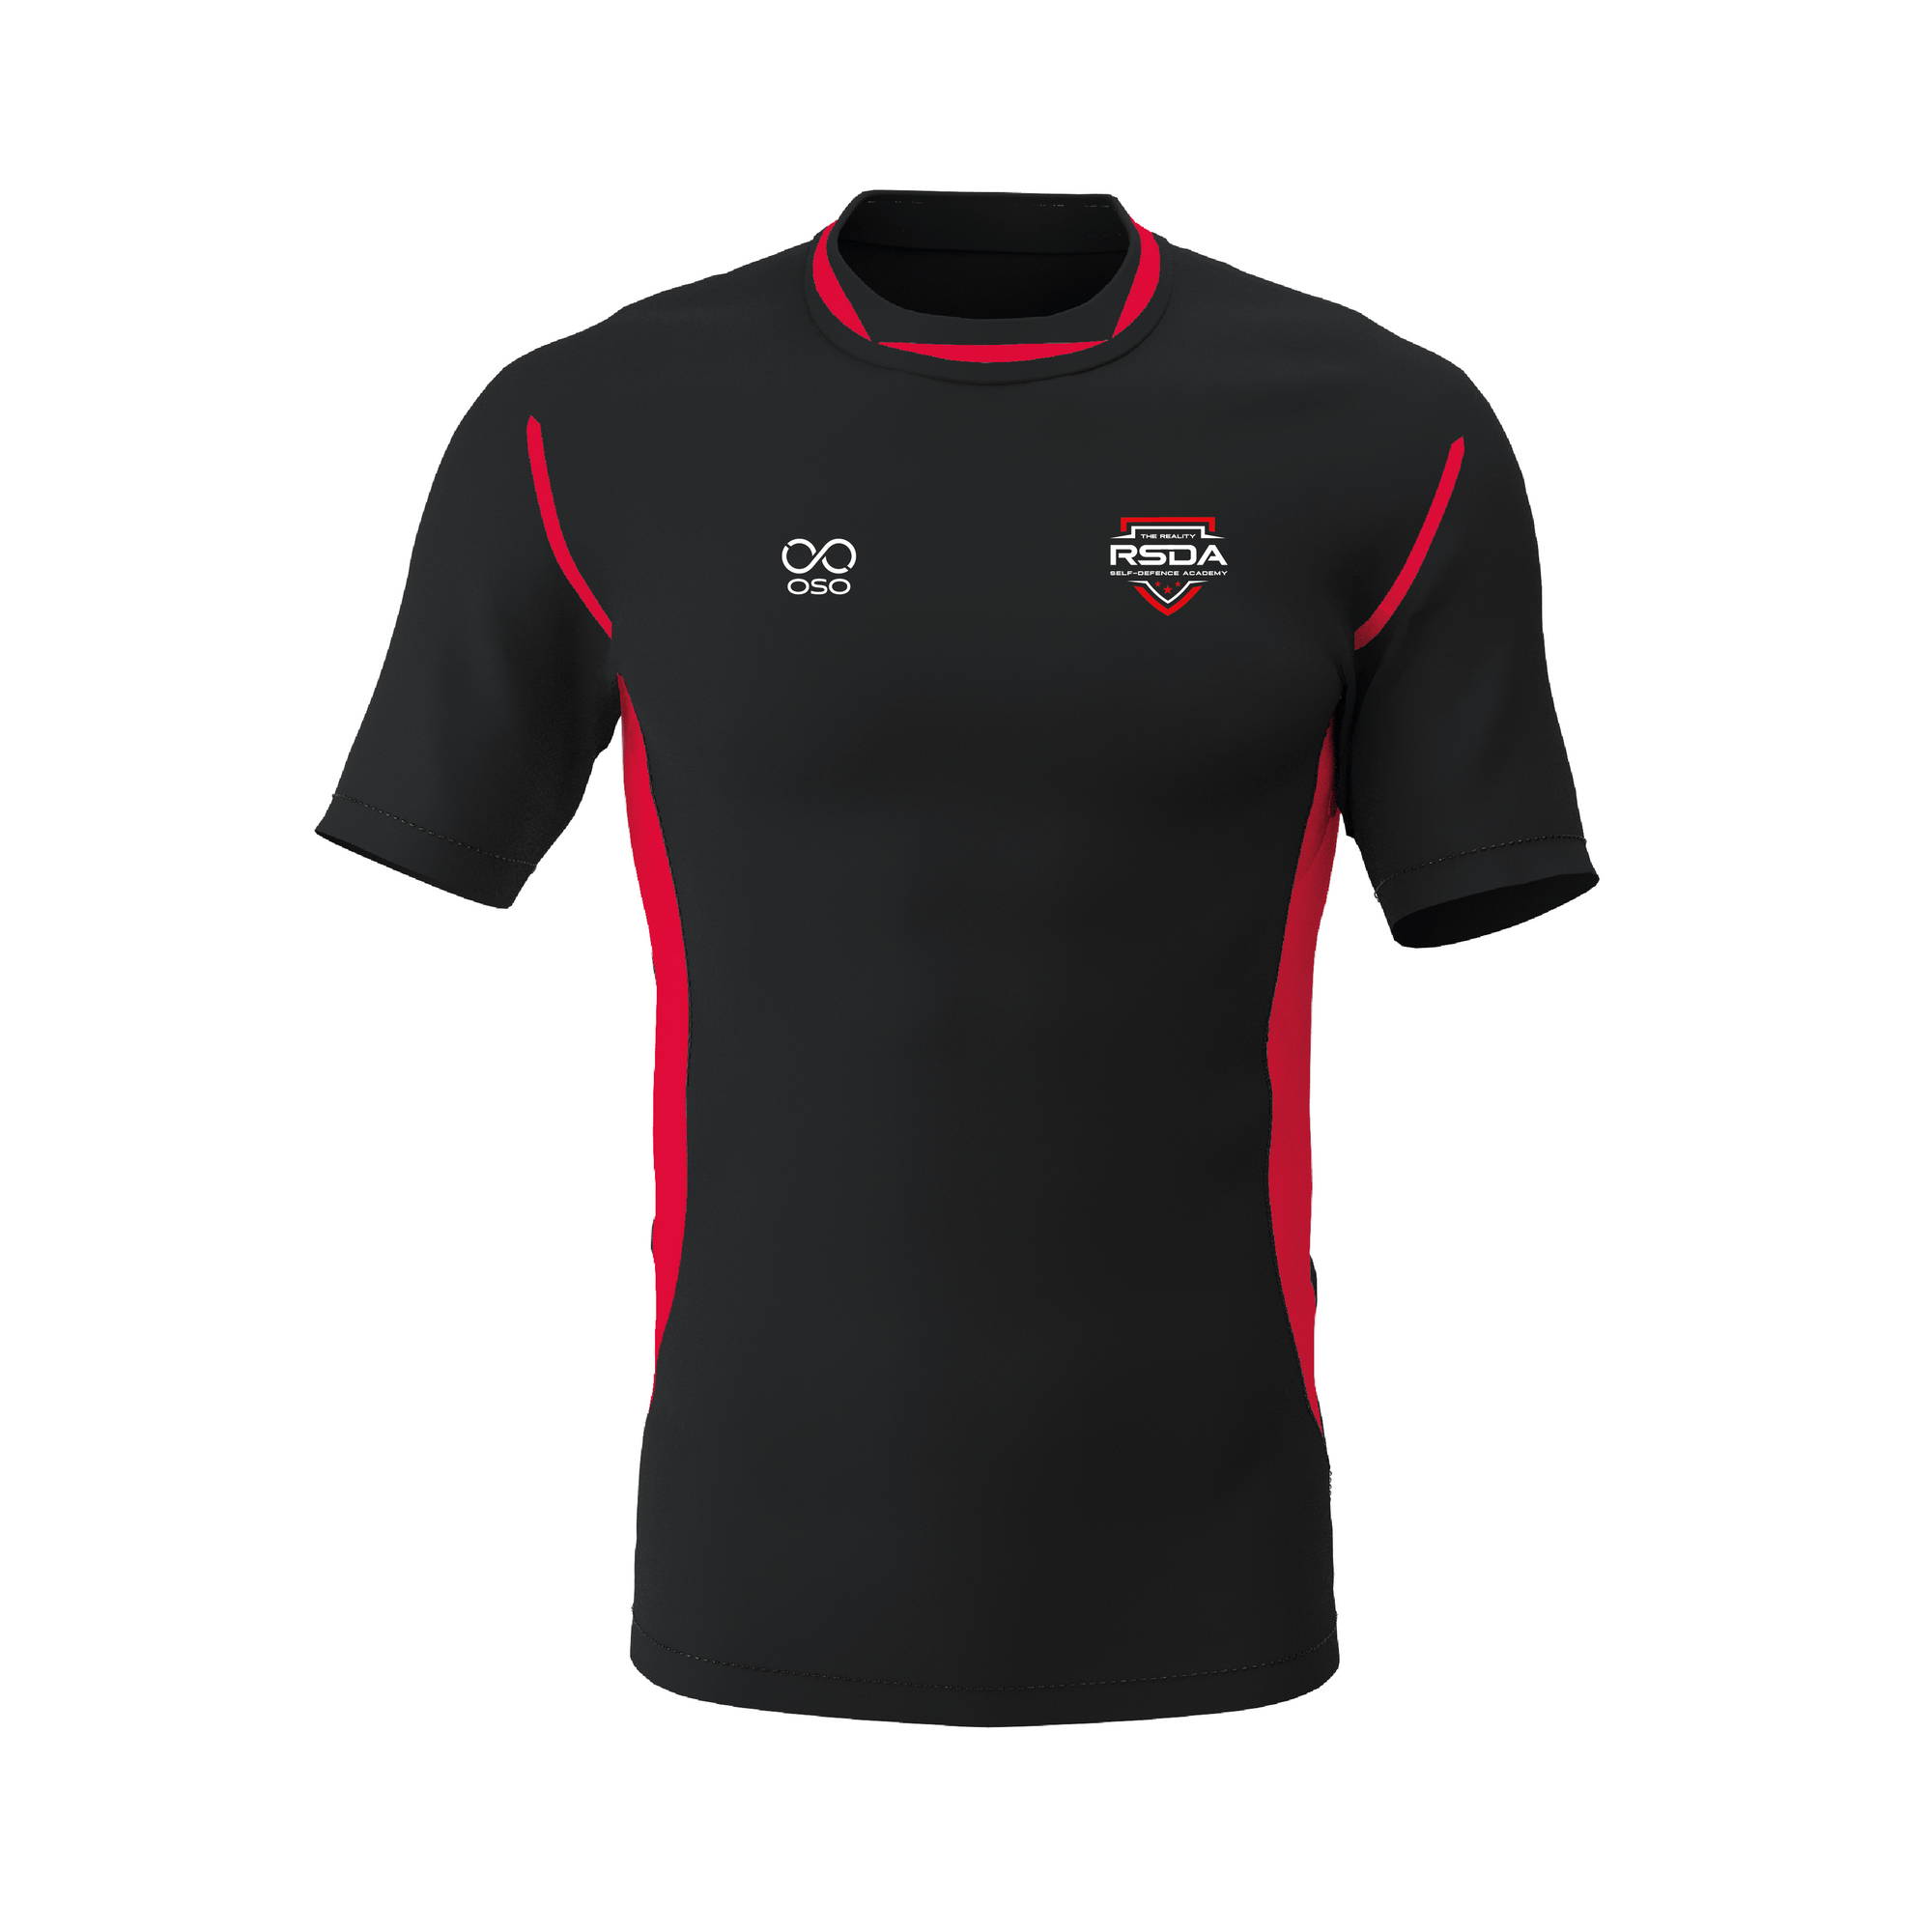 Krav Maga Training Base T-Shirt - Black/red